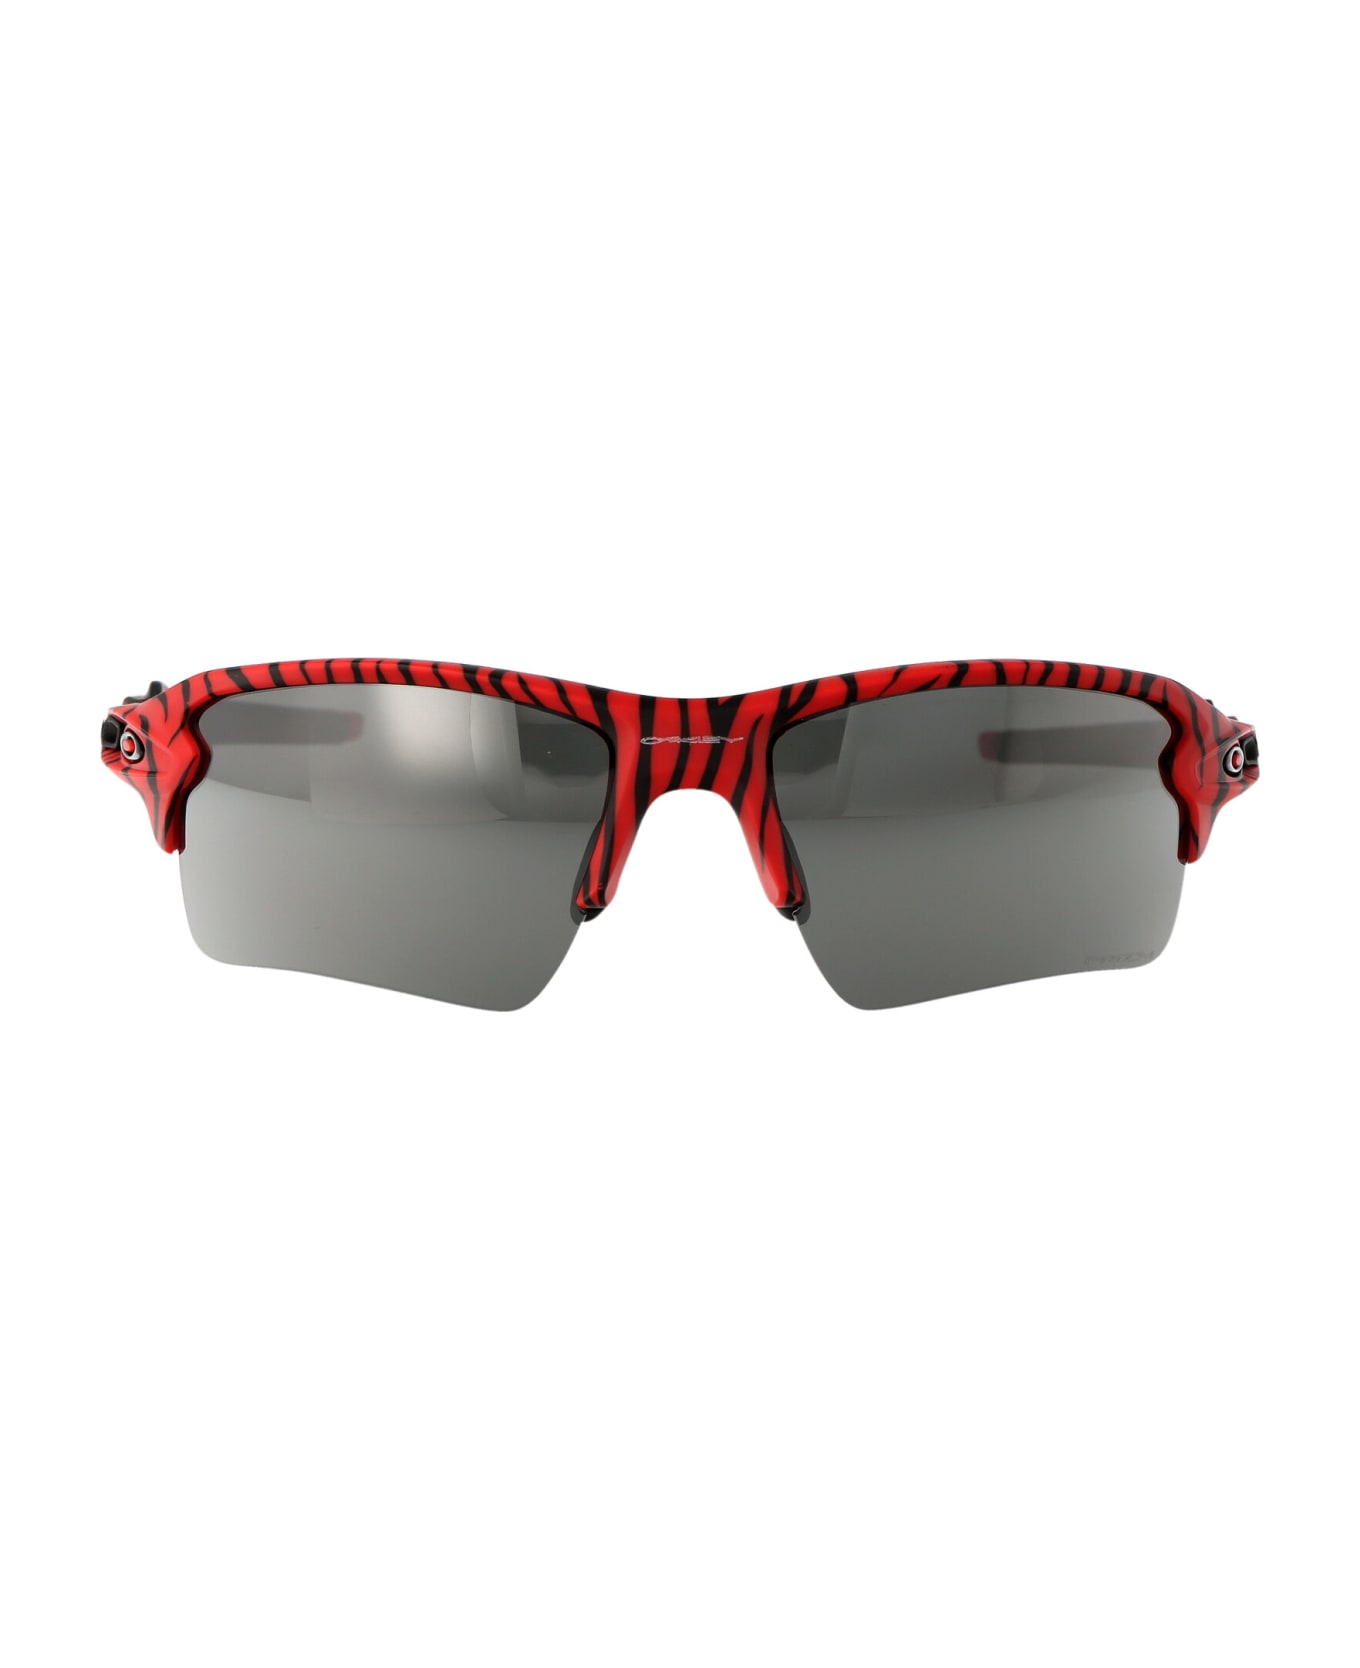 Oakley Flak 2.0 Xl Sunglasses - Red